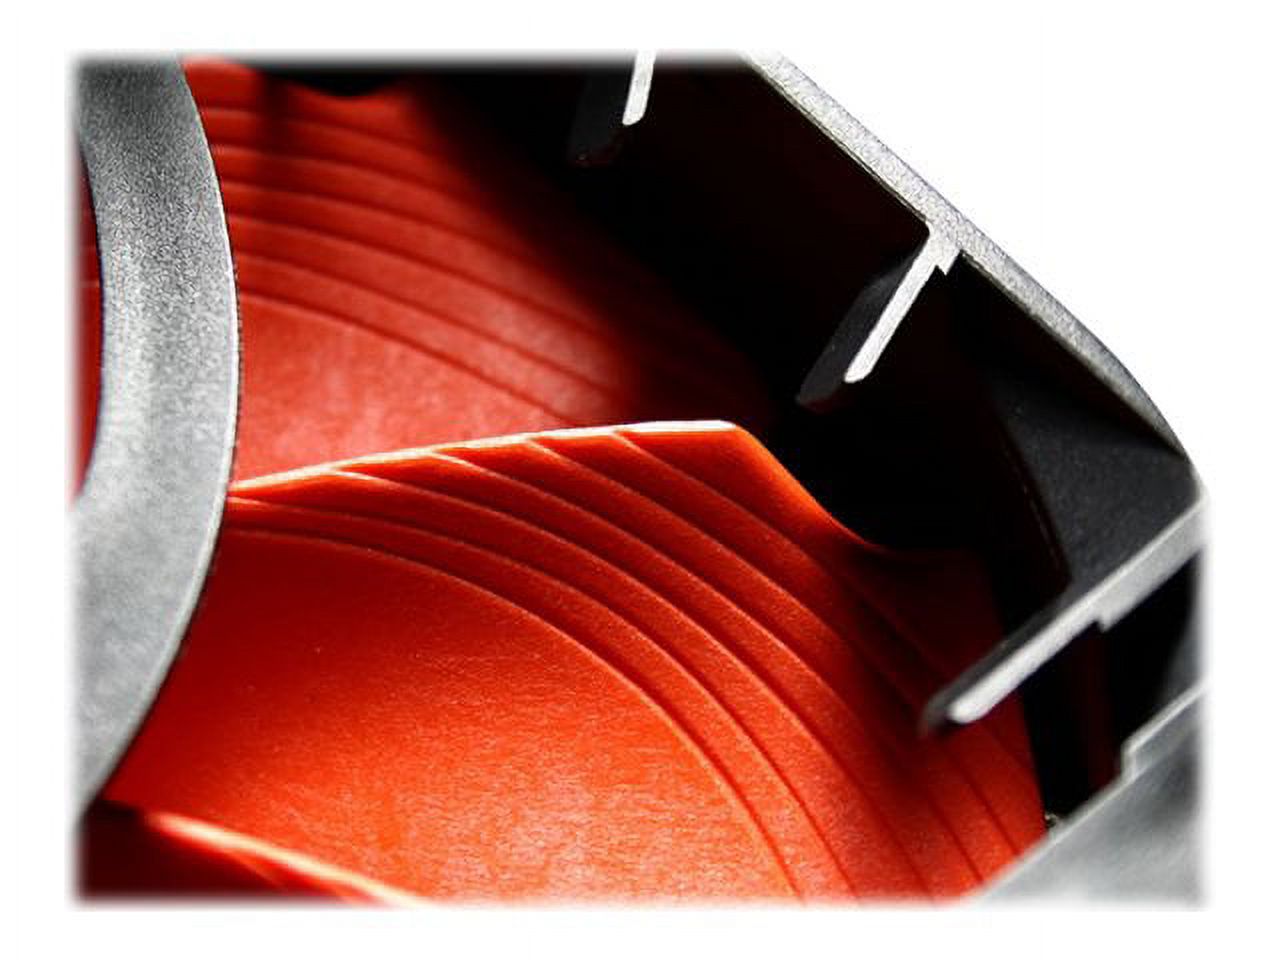 Cougar Vortex CF-V12H 120mm Hydro Dynamic Bearing Fluid Case Fan, Orange - image 5 of 8